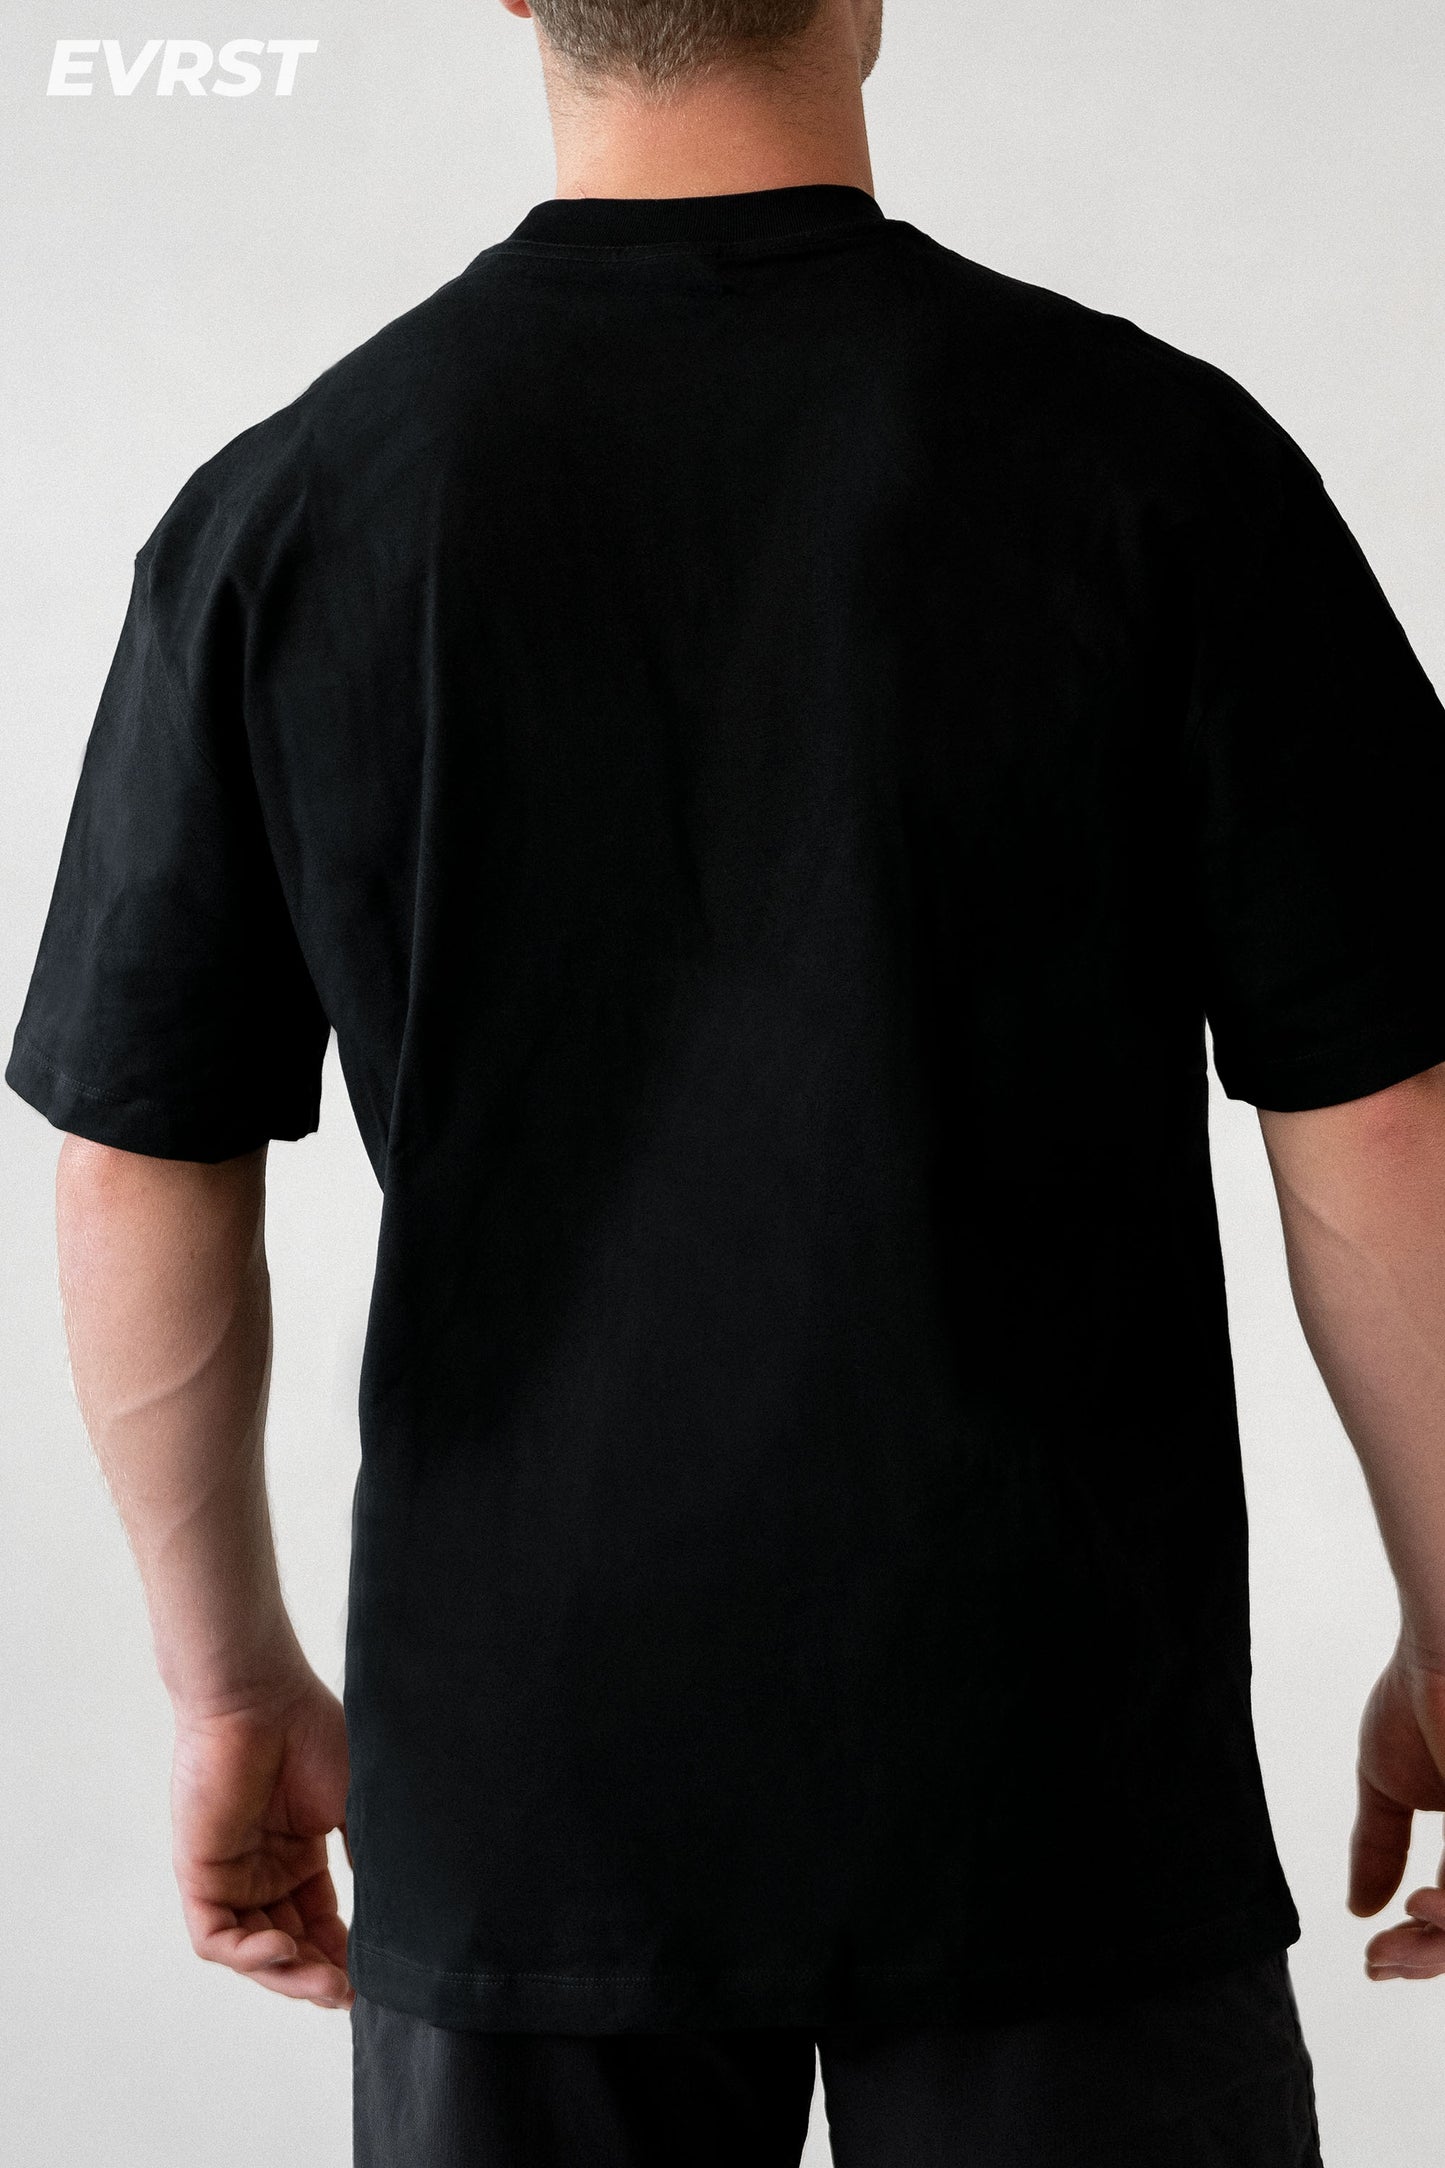 Black Ops T-Shirt